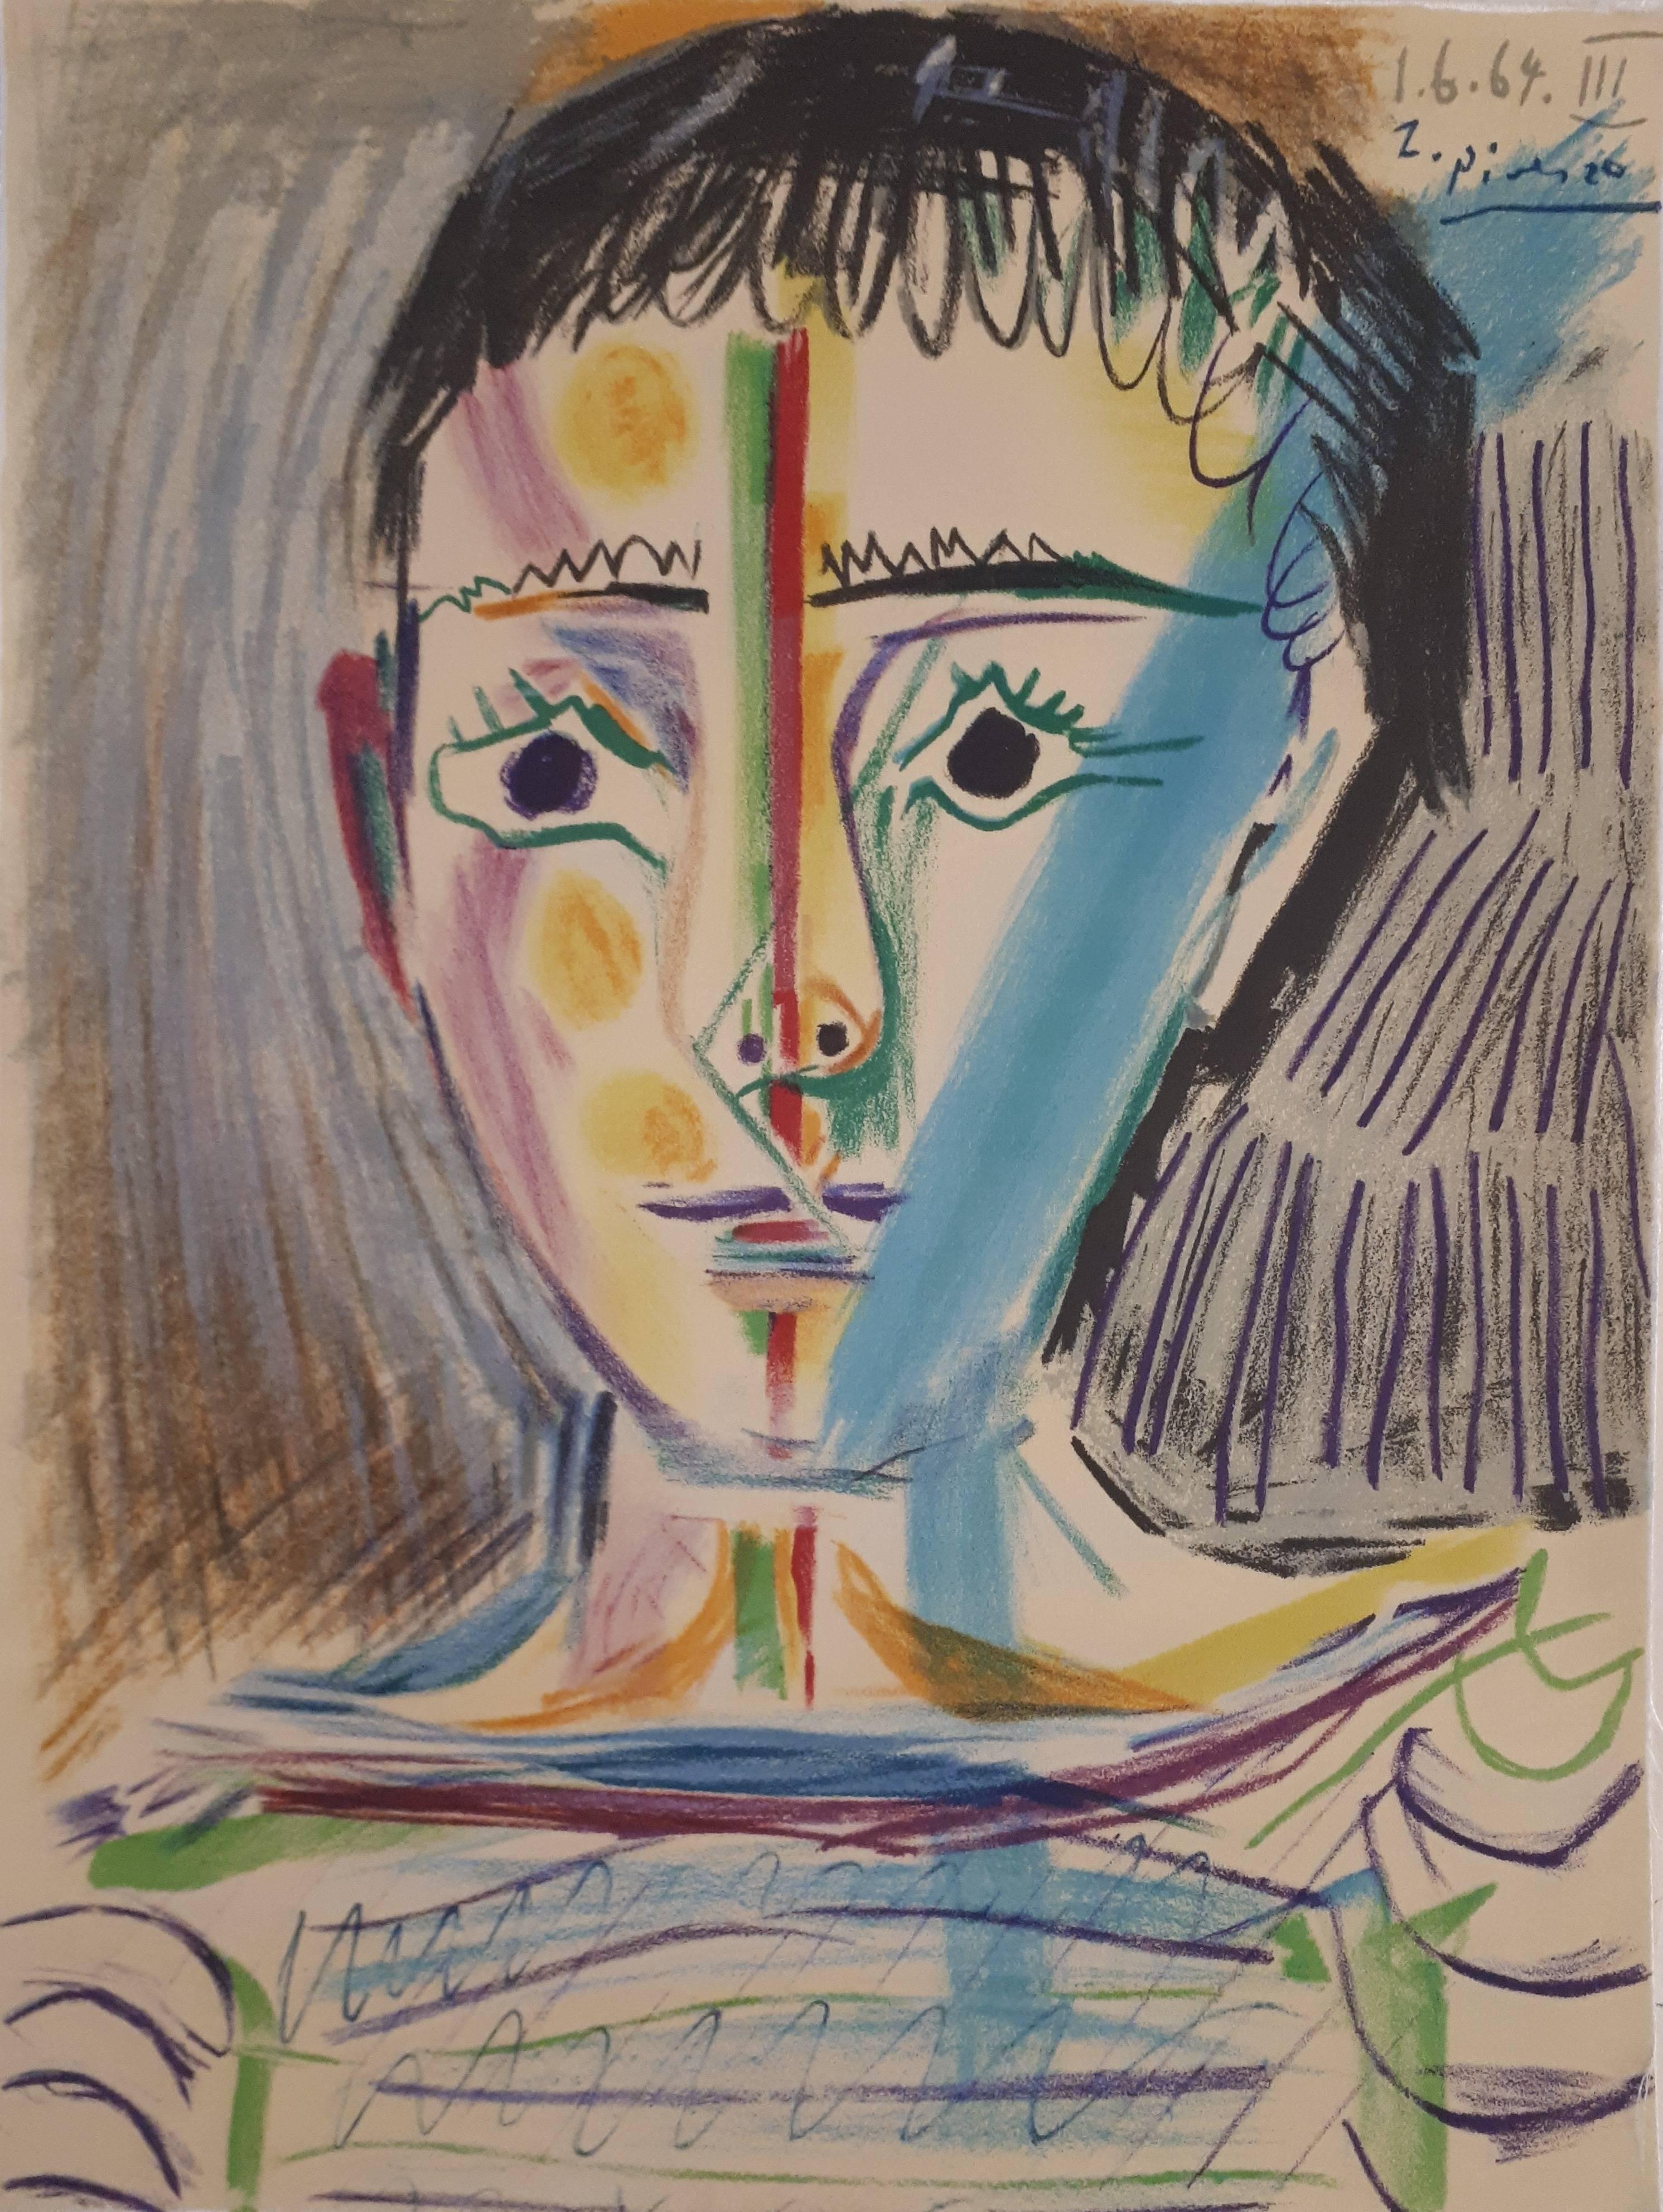 (after) Pablo Picasso Portrait Print - Man With Sailor Blouse - Stone lithograph - 1965